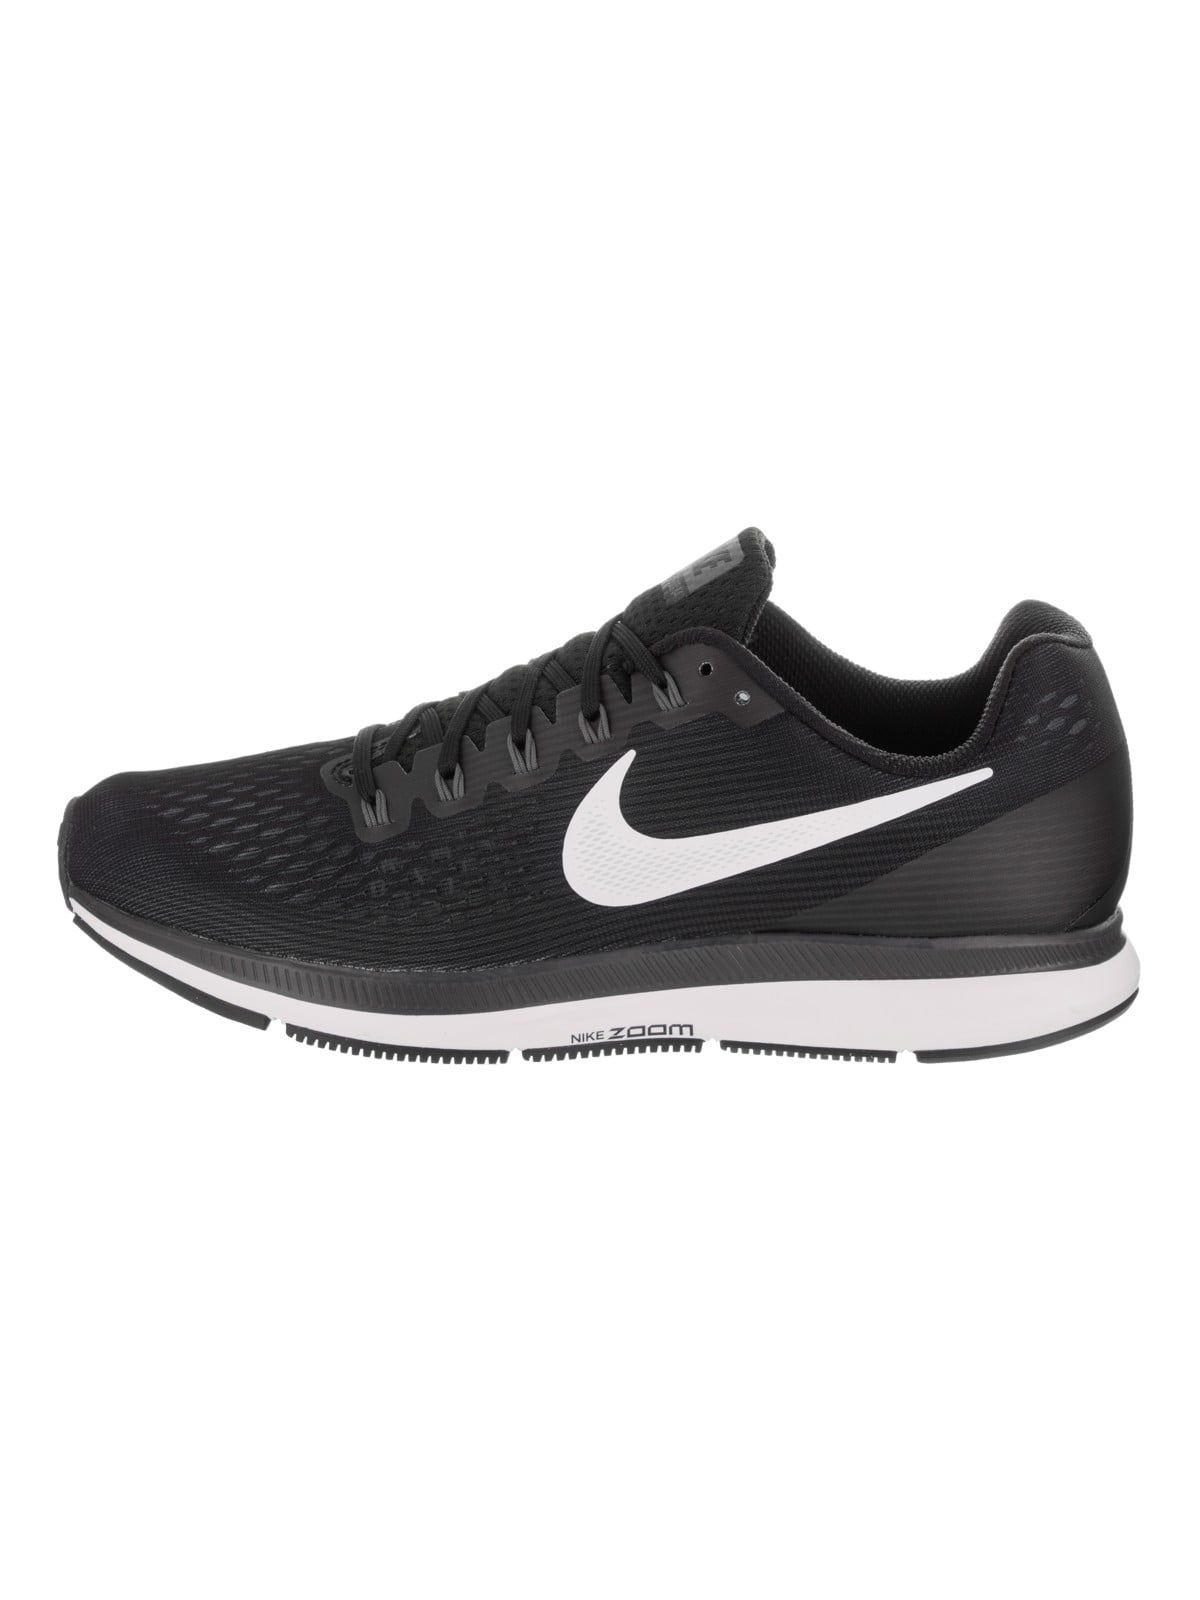 Nike Men's Air Zoom Pegasus 34 Black / White-Dark Grey Ankle-High Shoe - 9.5M - Walmart.com